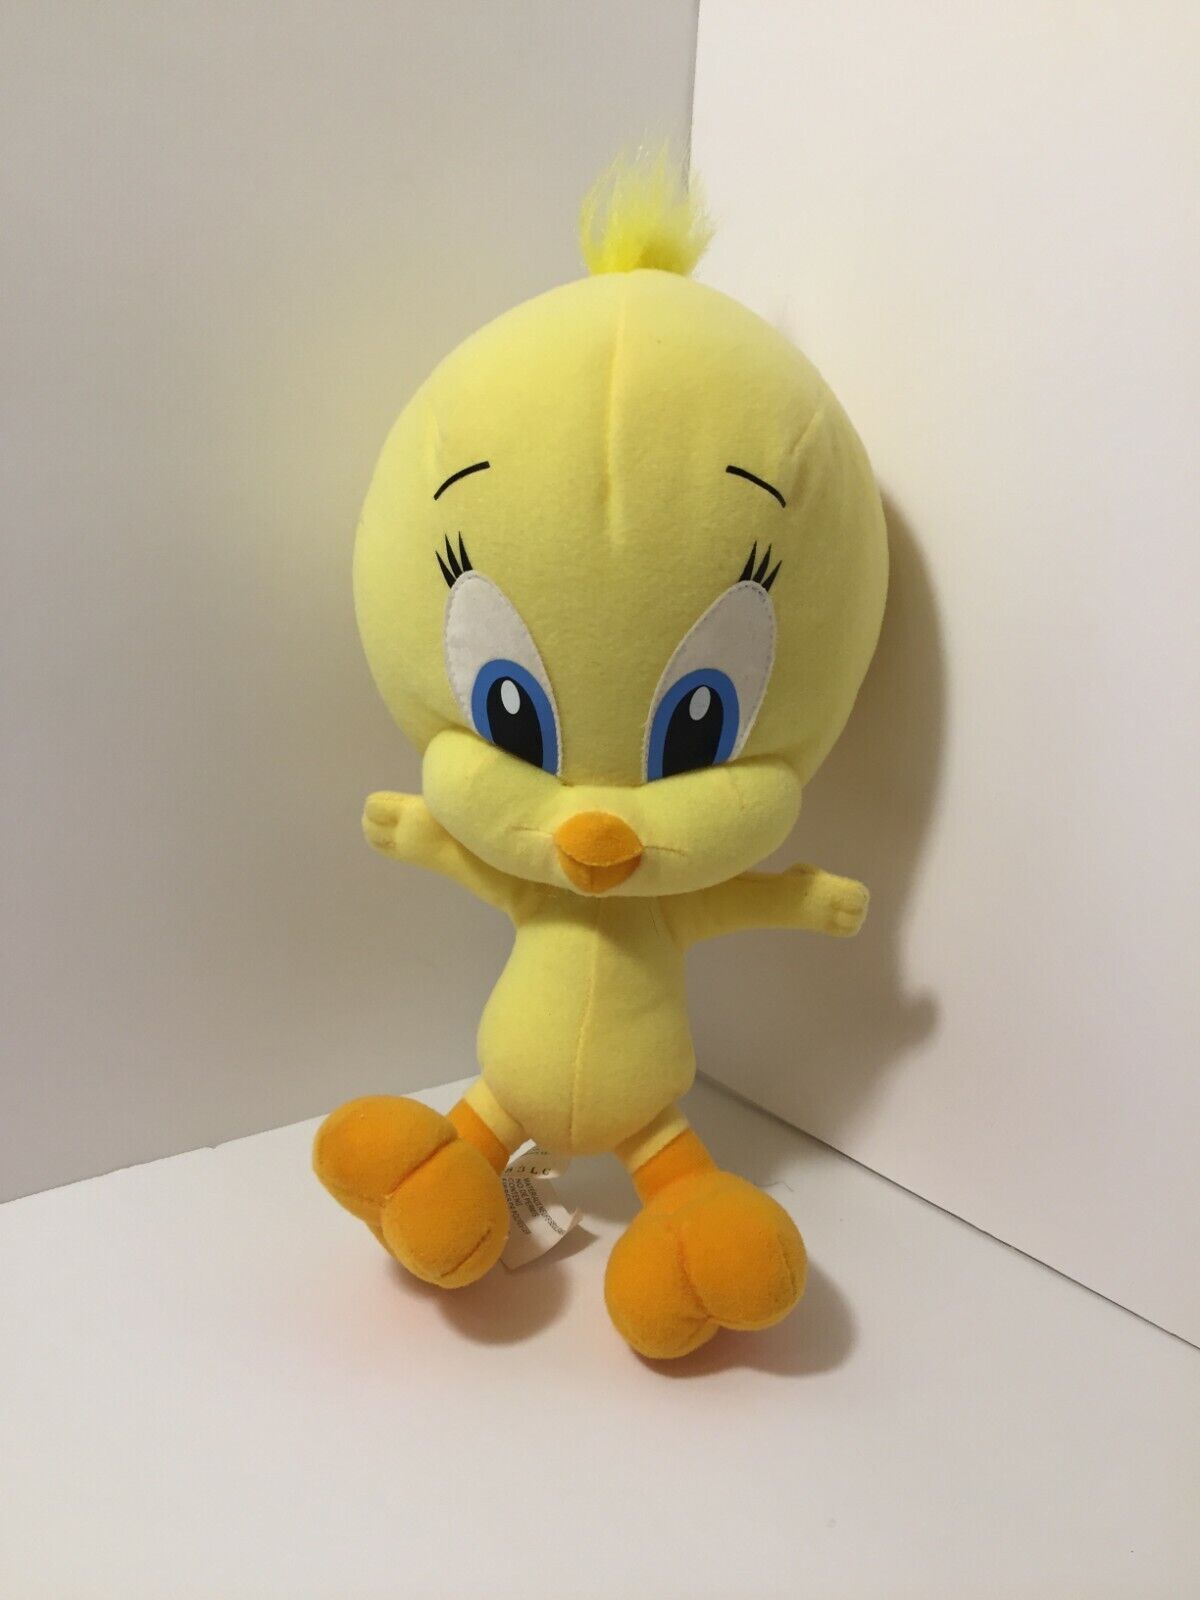 Fisher-Price Tweety Bird Stuffed Animal Plush Toy Bedtime Lovey 2002 Mattel - $7.76